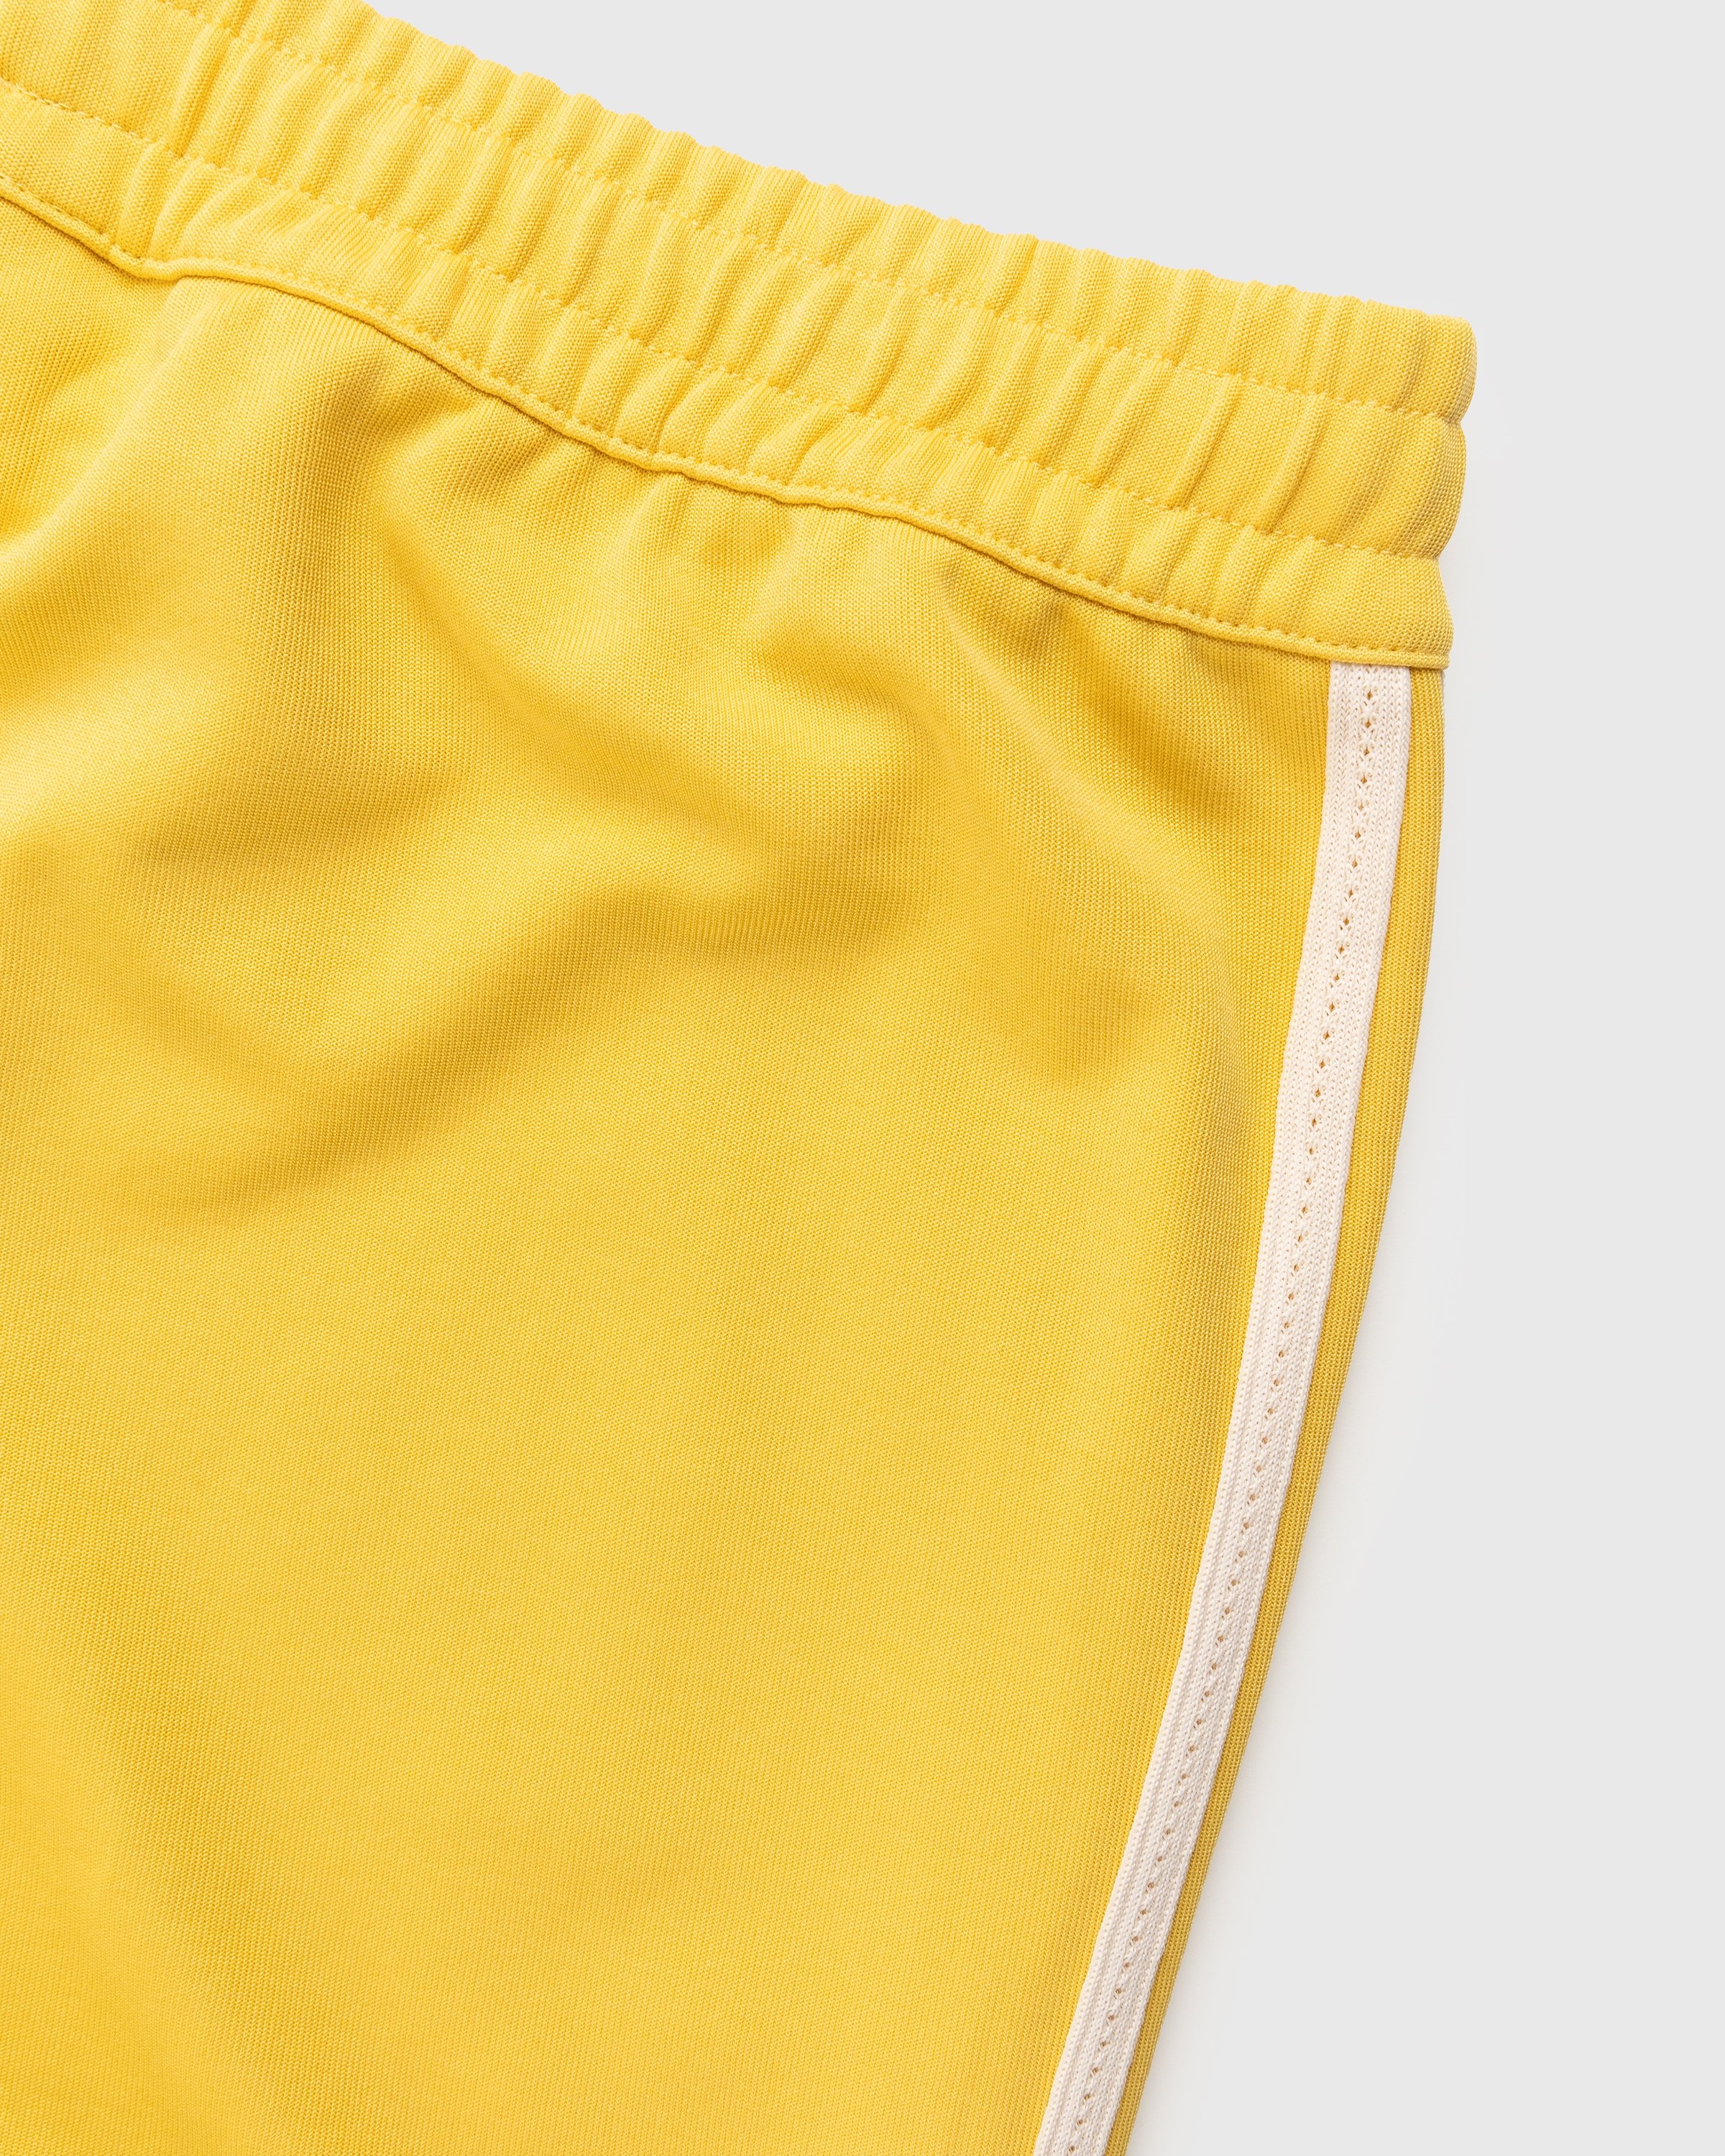 Adidas x Wales Bonner – WB Track Pants St Fade Gold - Track Pants - Yellow - Image 4